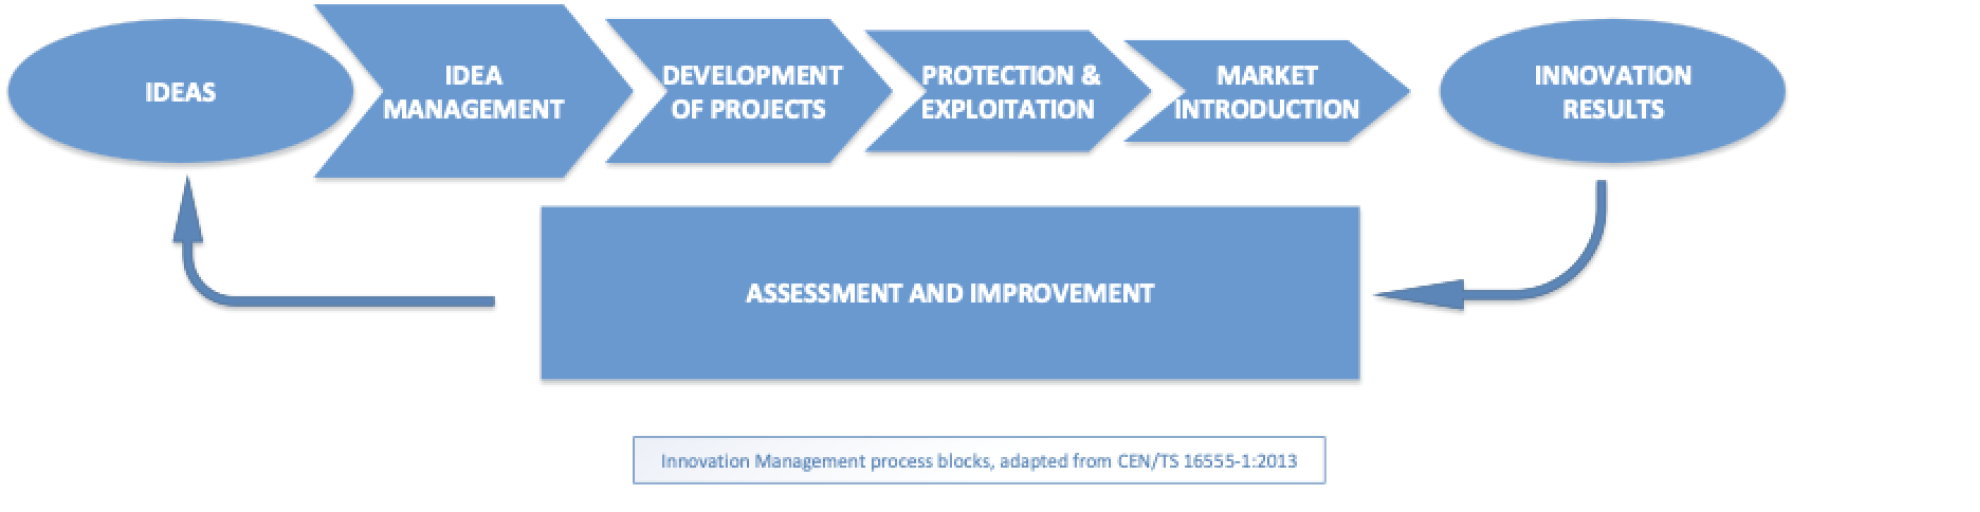 Innovation Management process blocks